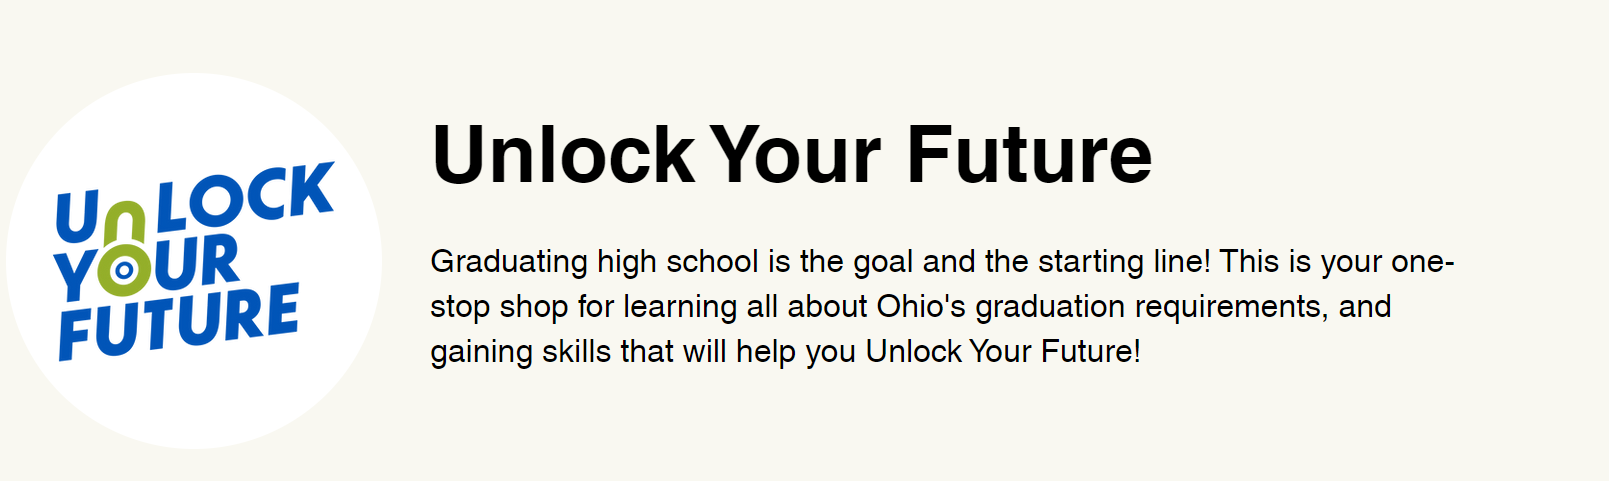 Unlock your Future link